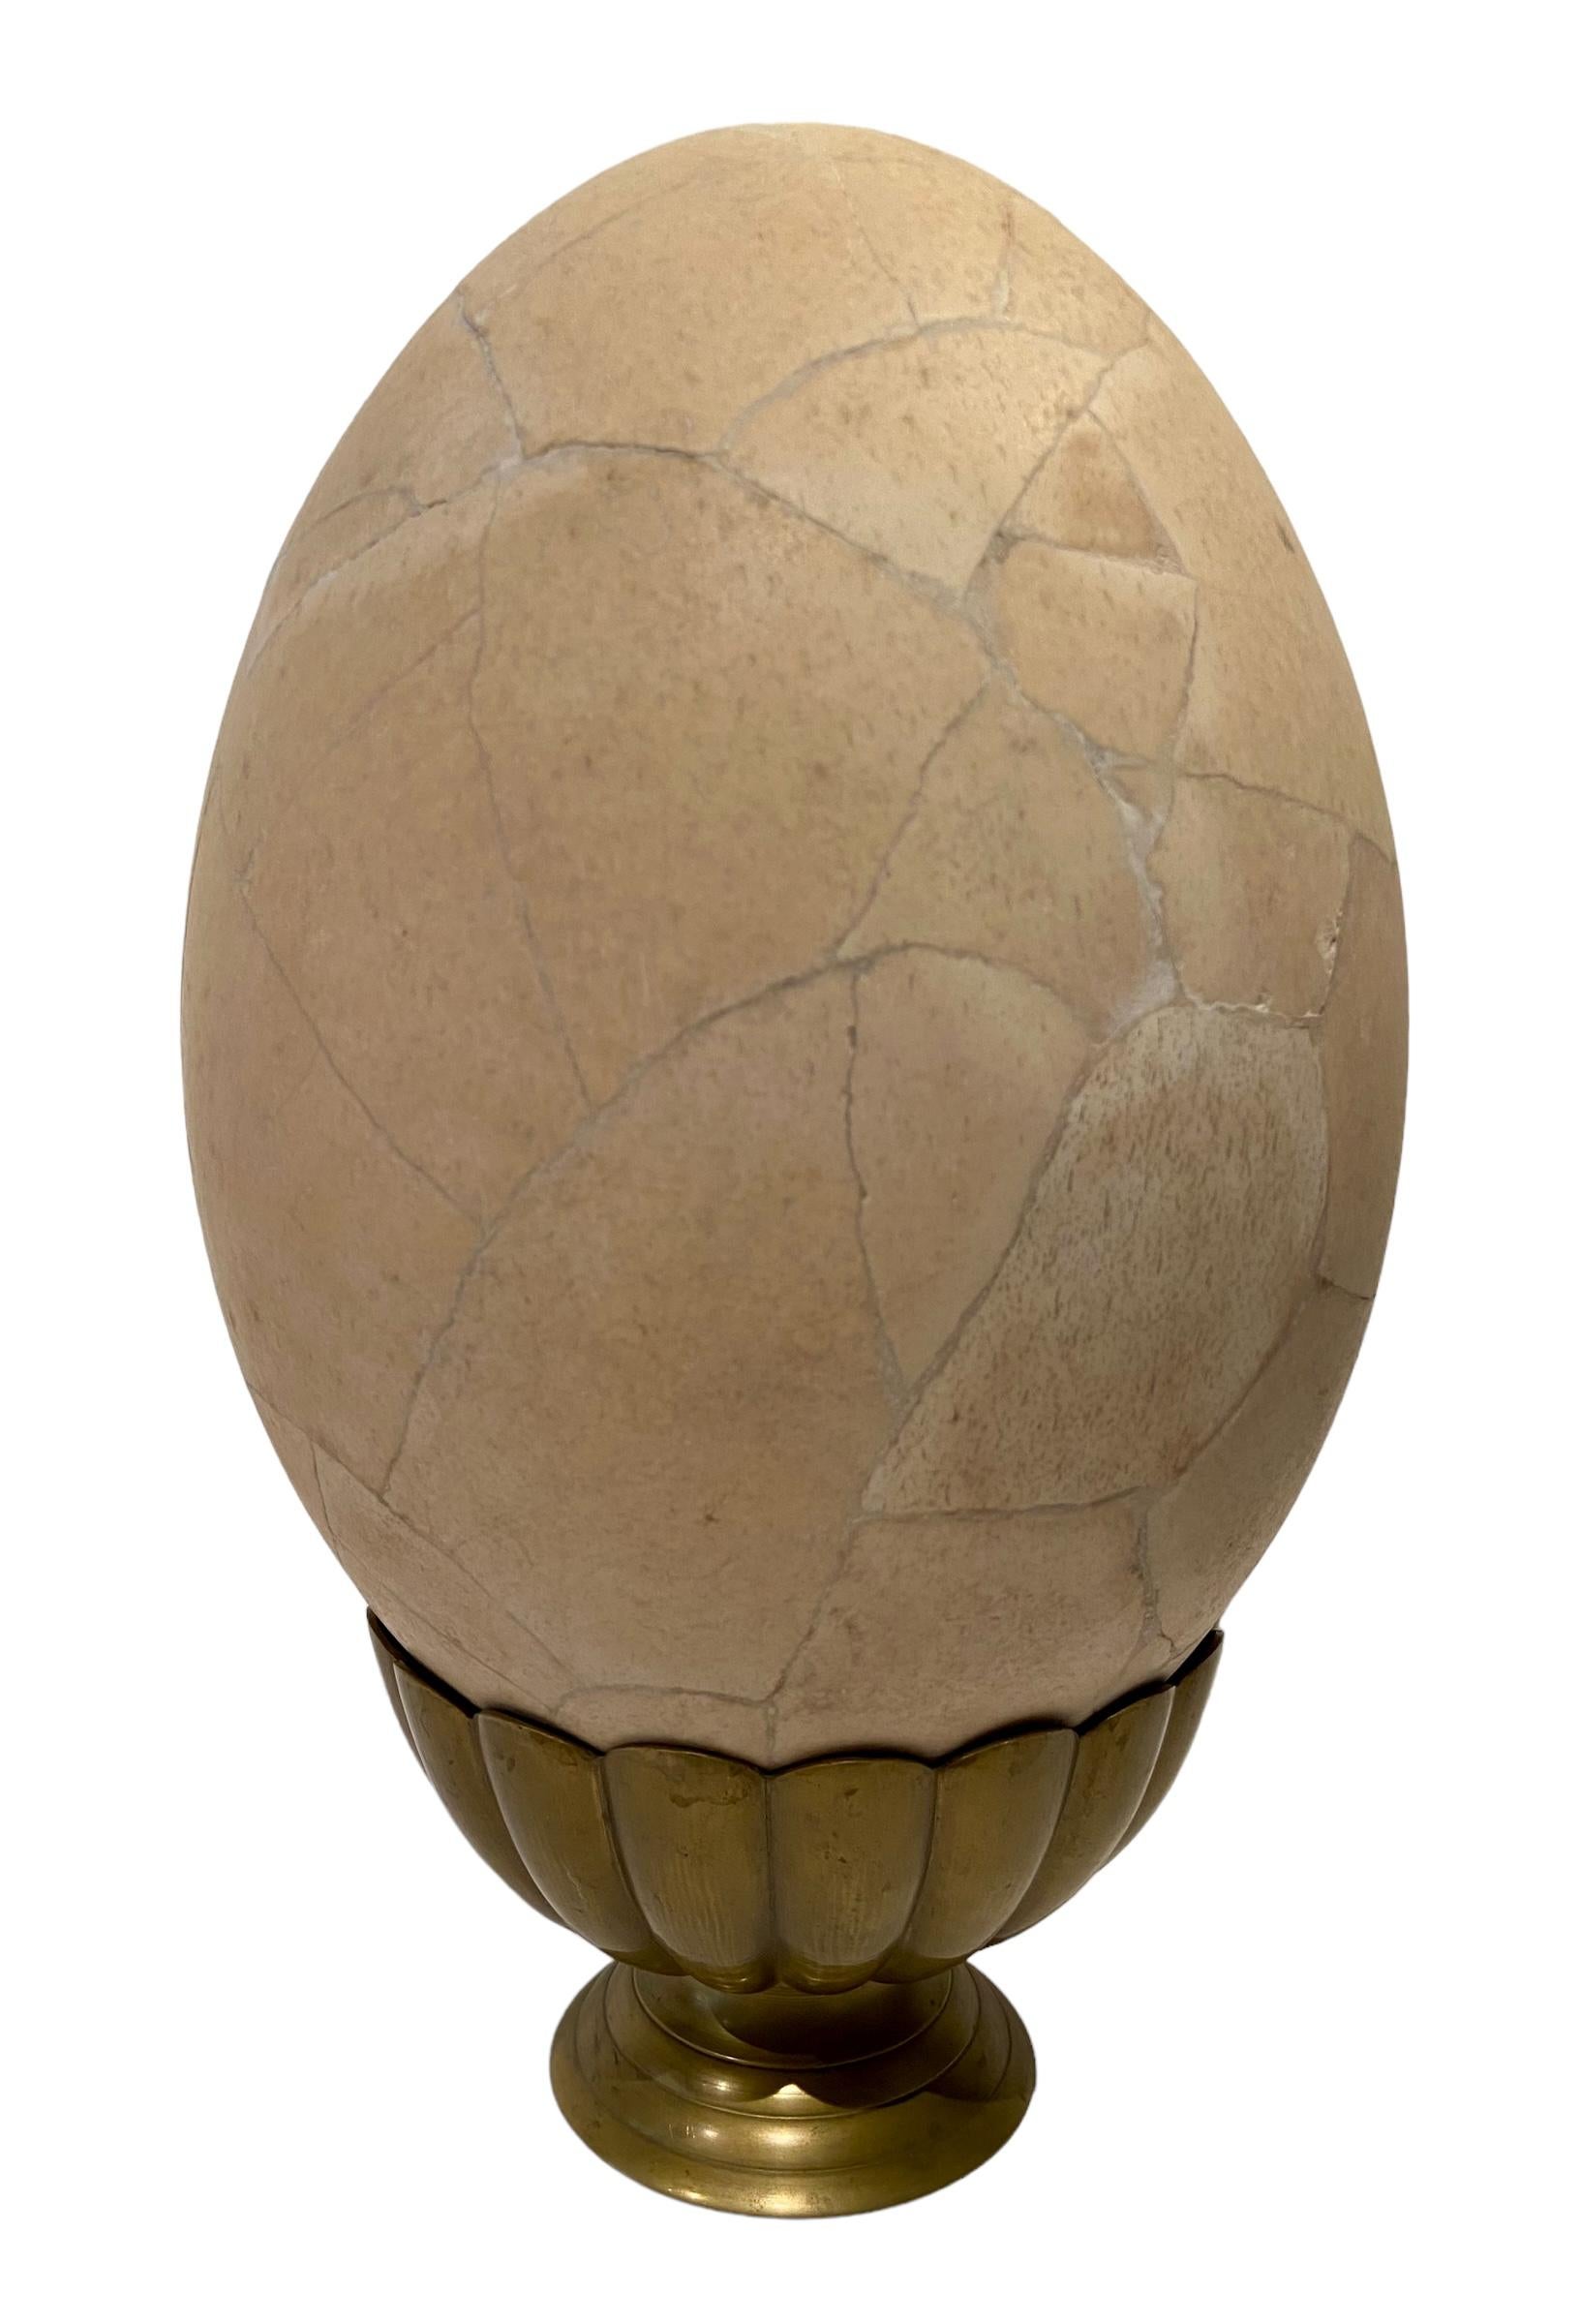 Malagasy Elephant bird egg For Sale